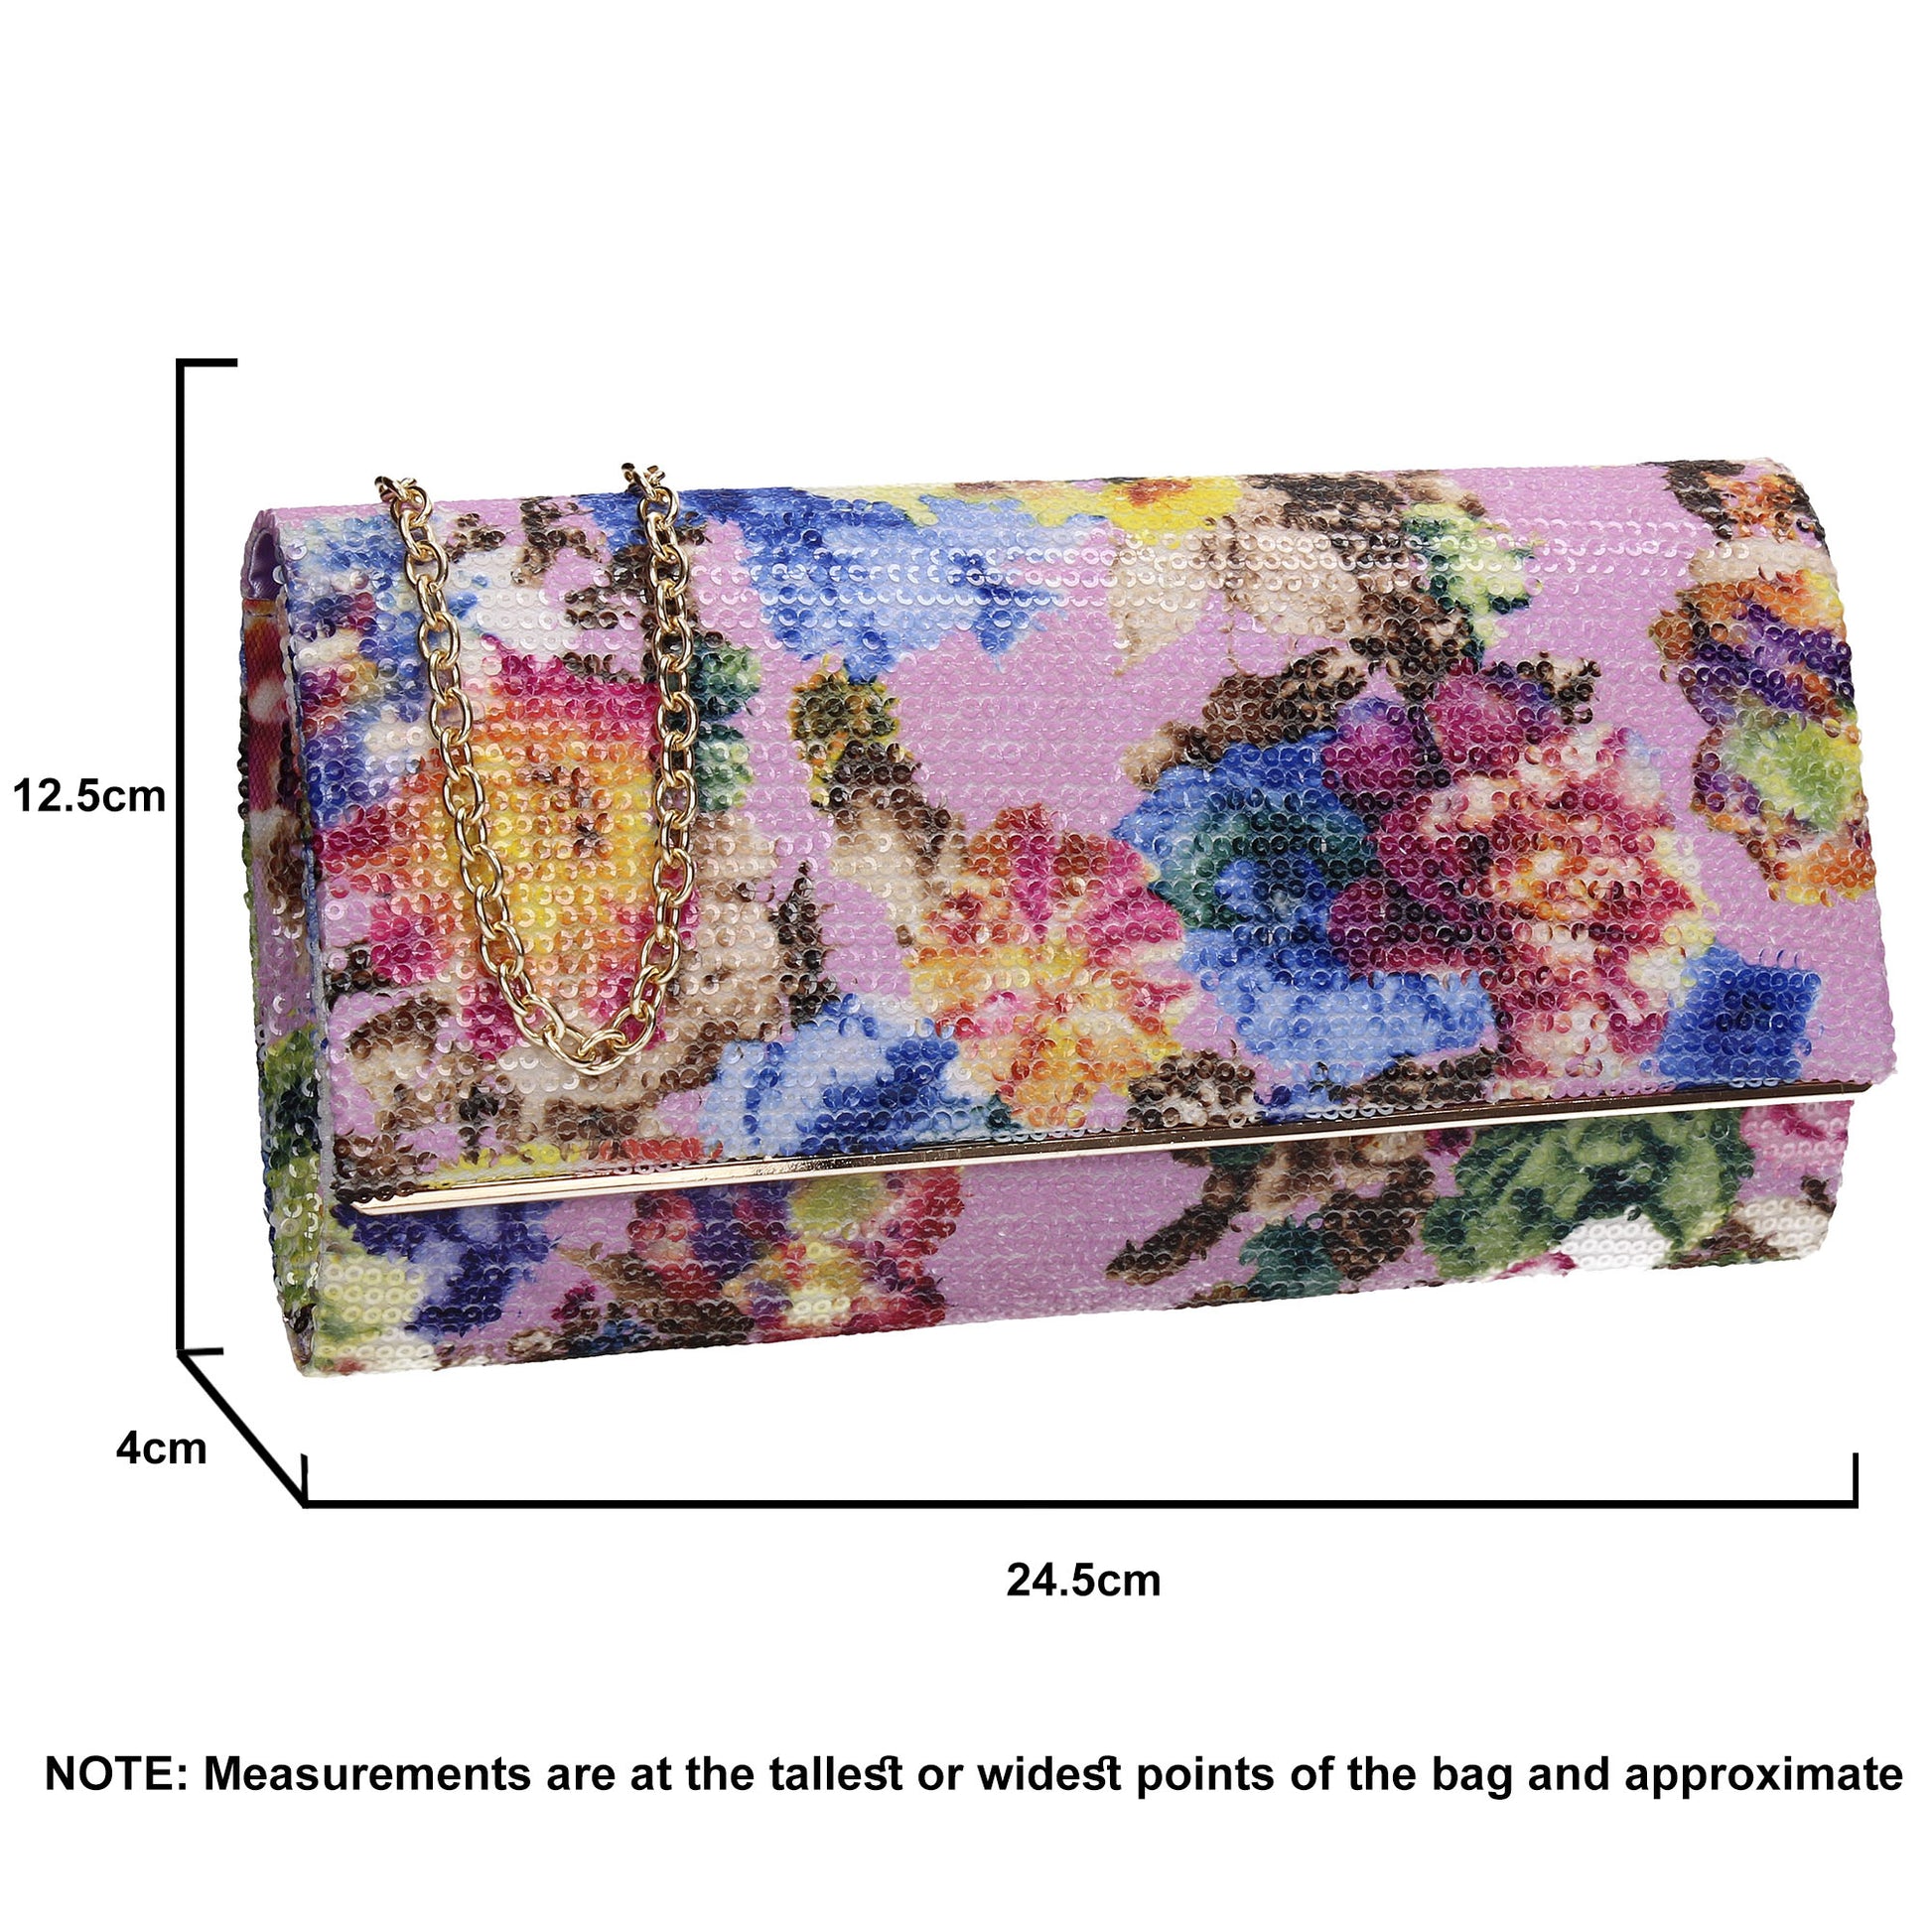 SWANKYSWANS Kyra Clutch Bag Lilac Cute Cheap Clutch Bag For Weddings School and Work